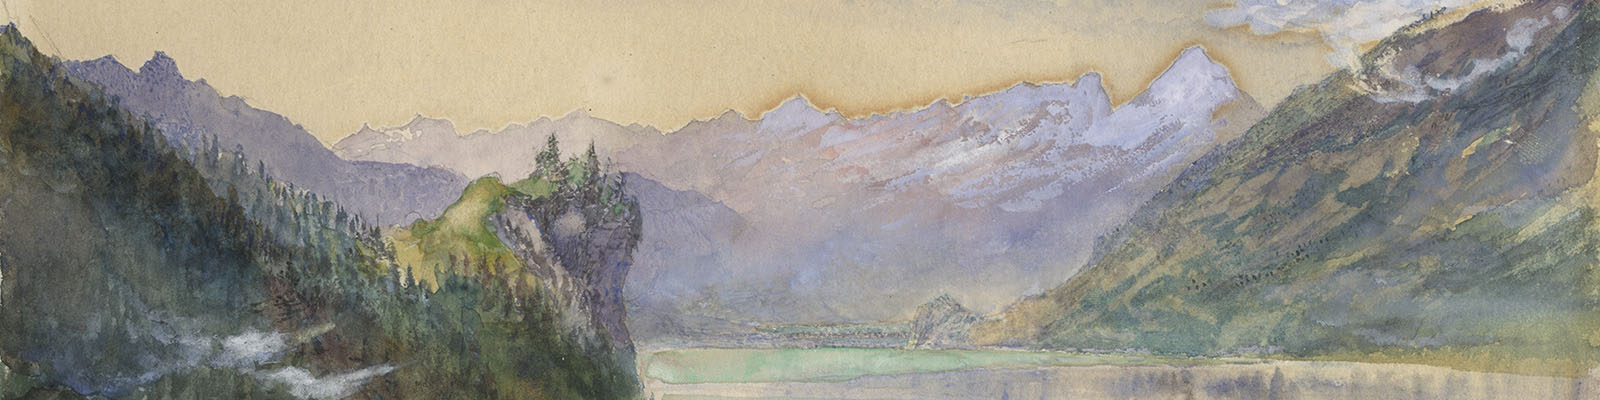 John Ruskin: Lake of Brienz